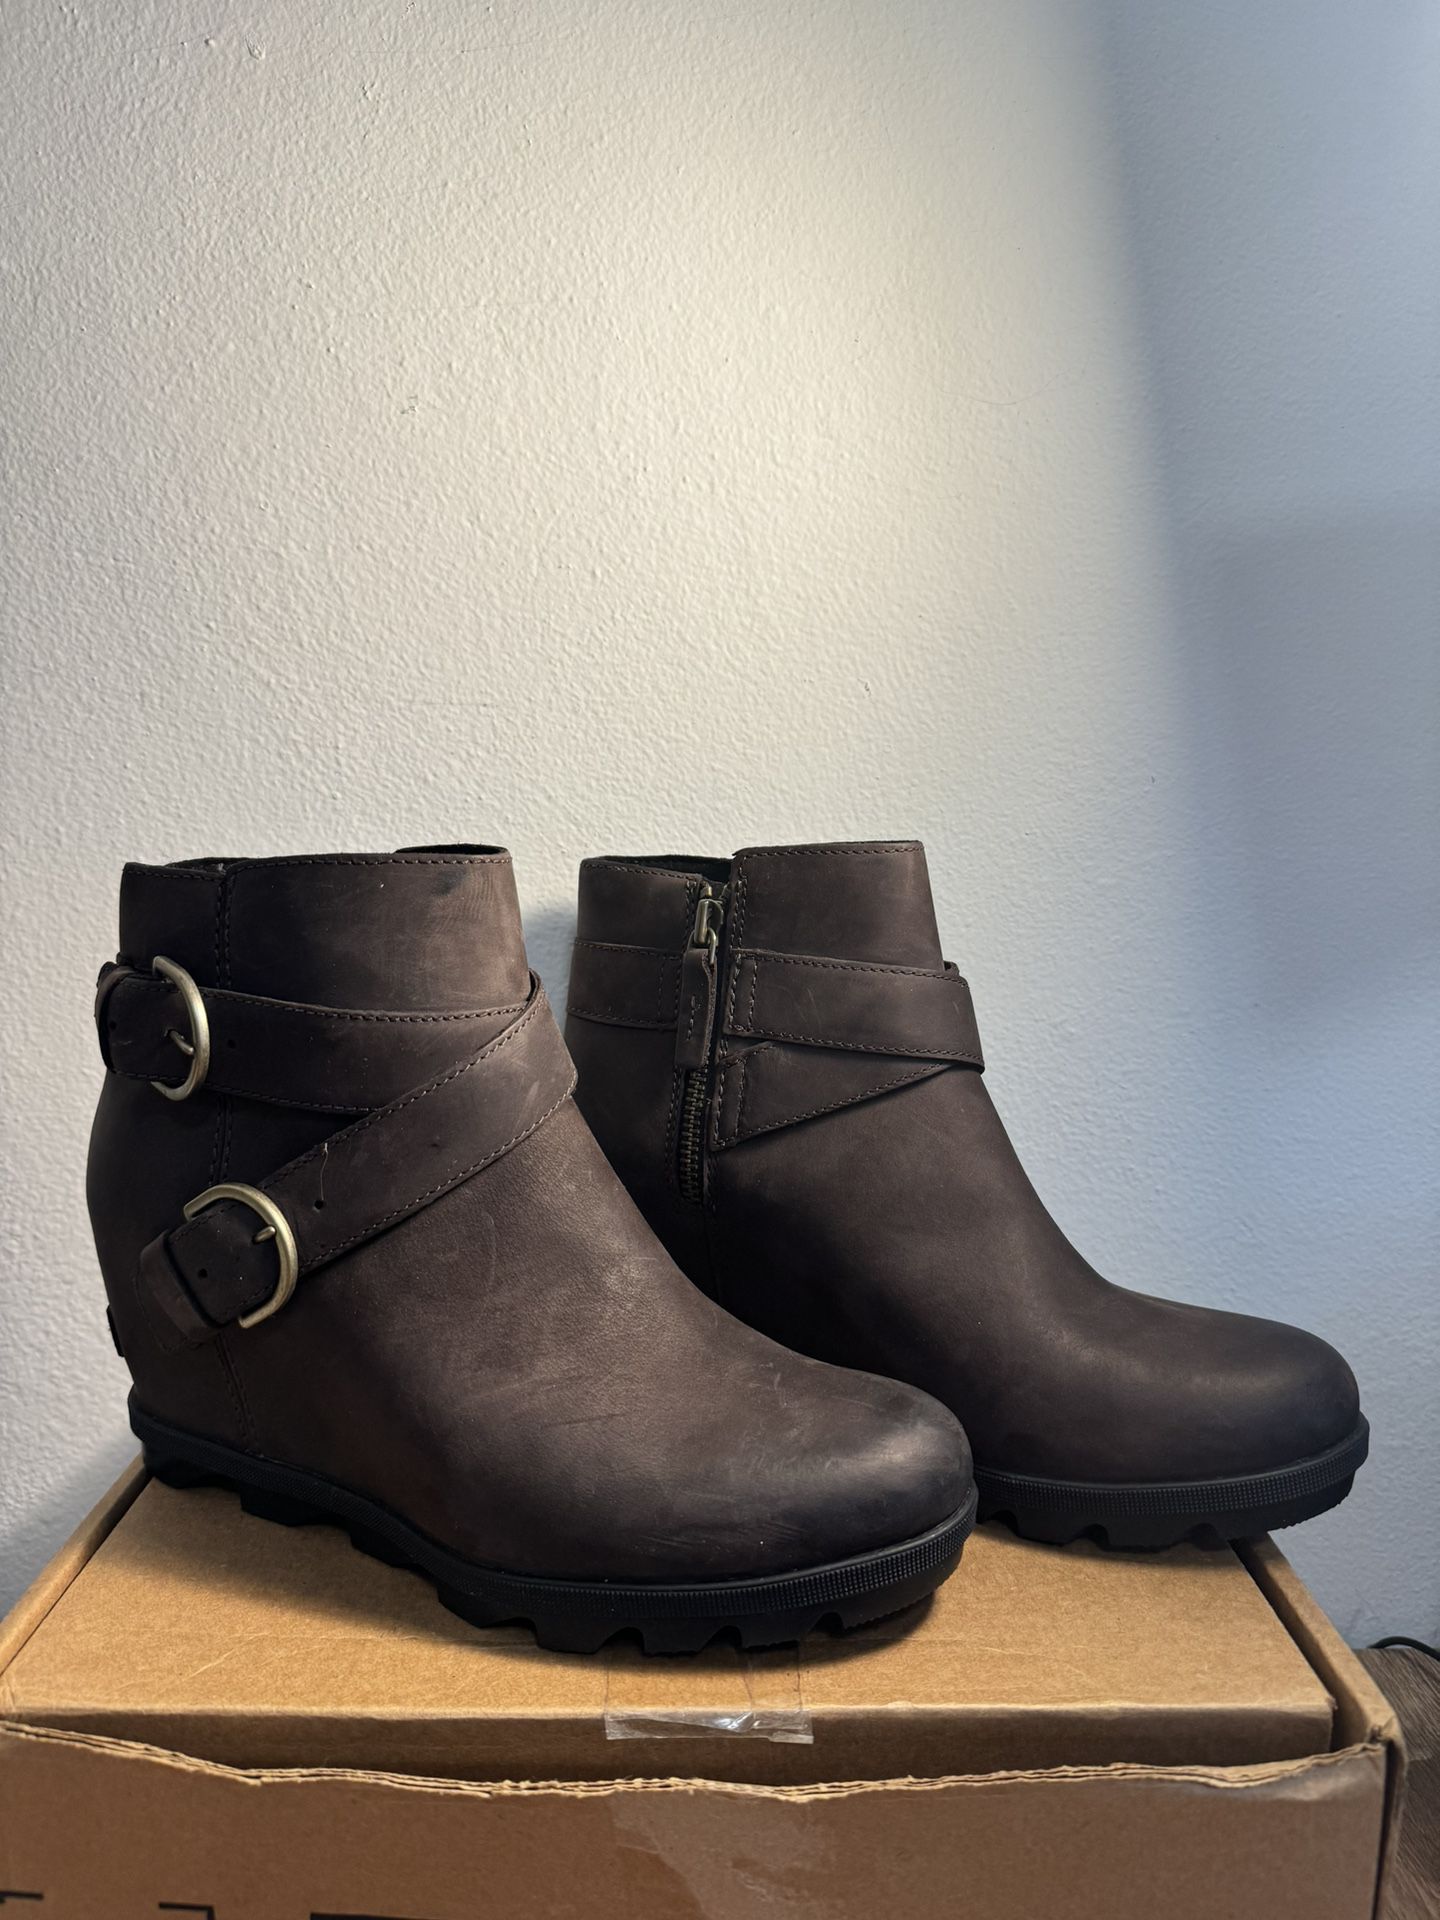 New SOREL Joan of Arctic Women’s, Brown, Wedge boots, Double Buckle, NL3761-205. Size 10